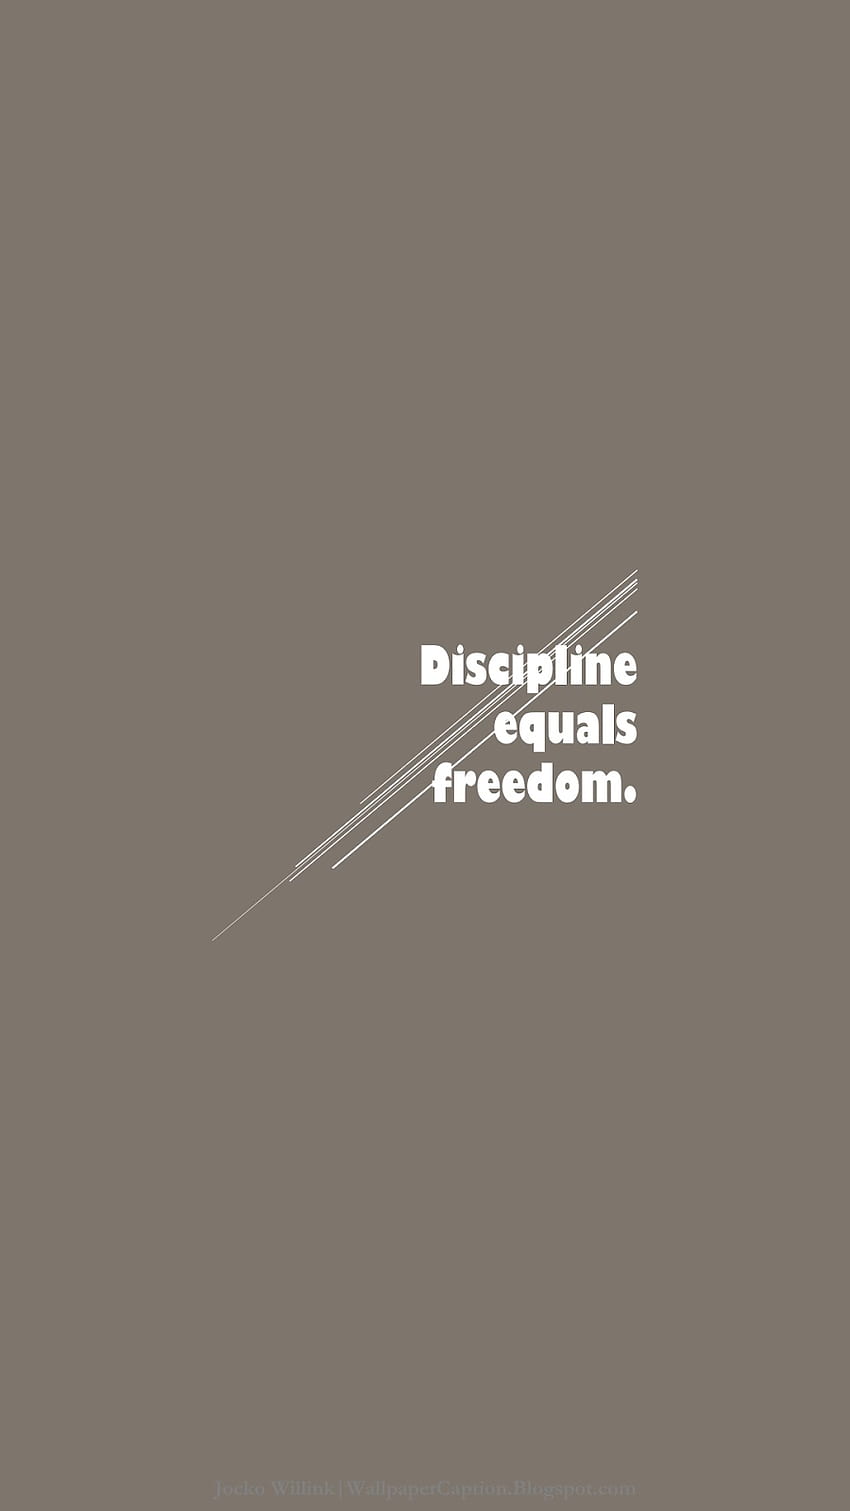 MOTIVATIONAL WALLPAPER ON DISCIPLINE  PAIN OF DISCIPLINE  Dont Give Up  World